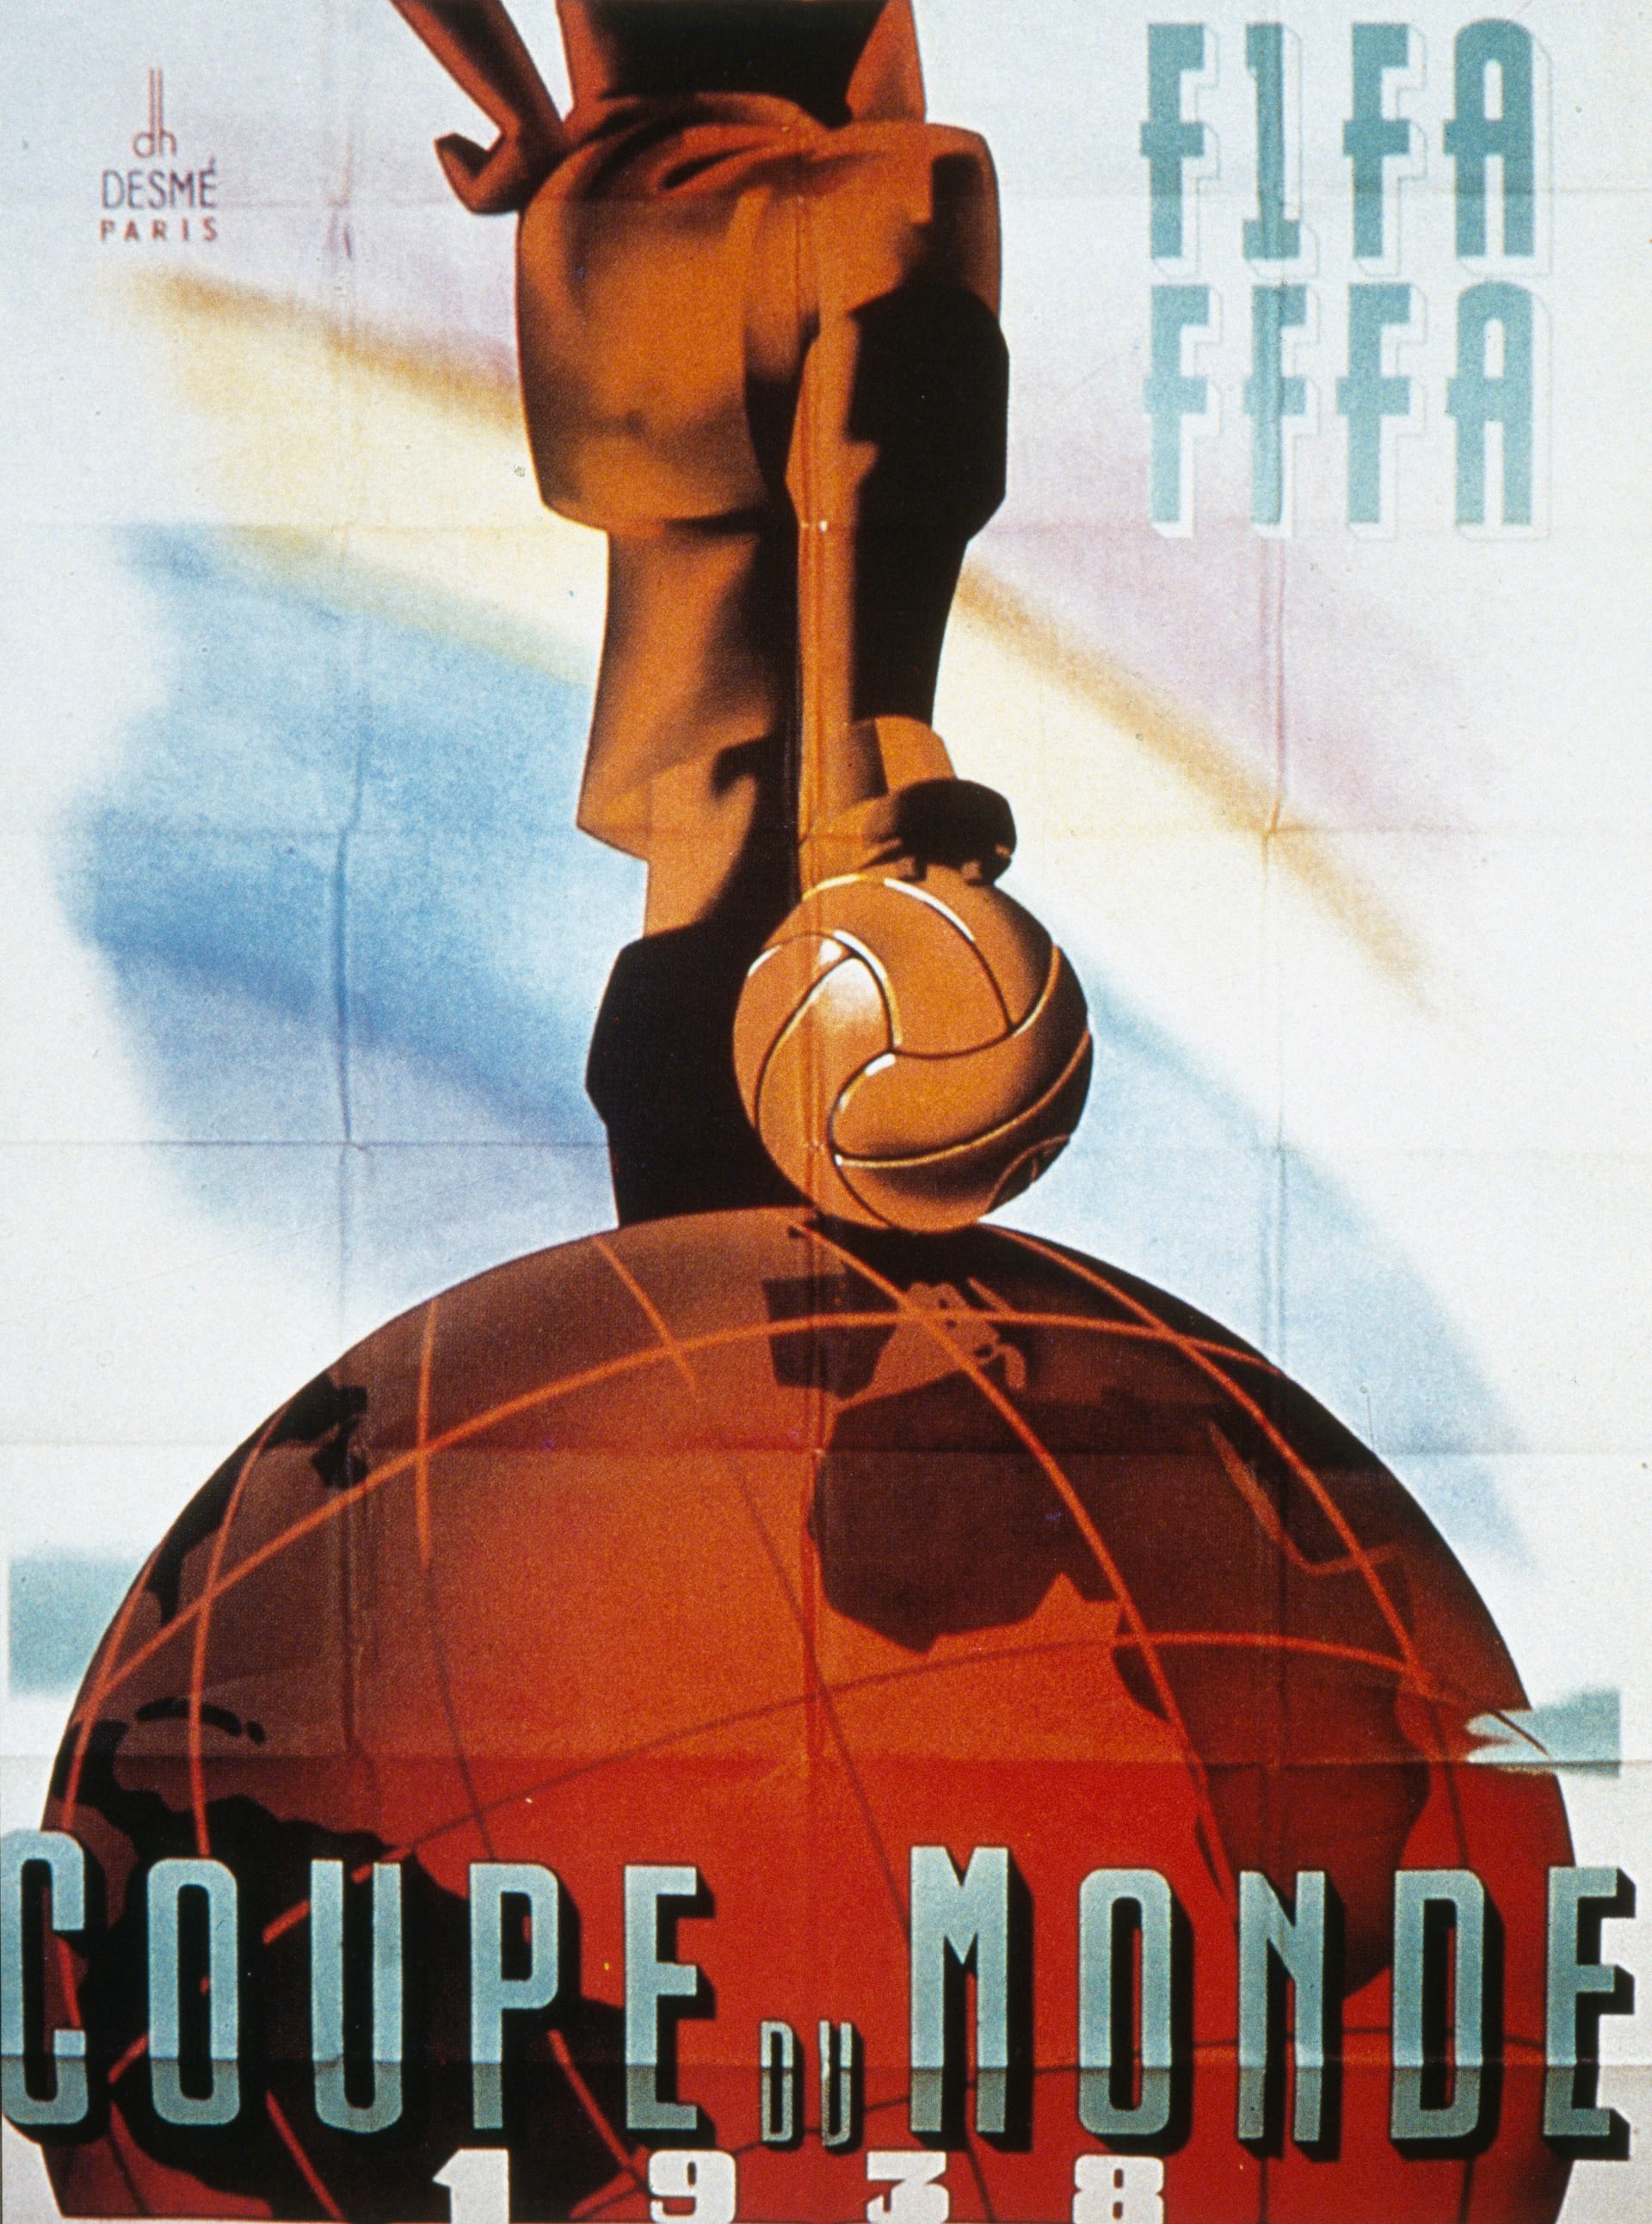 1938 / Francia